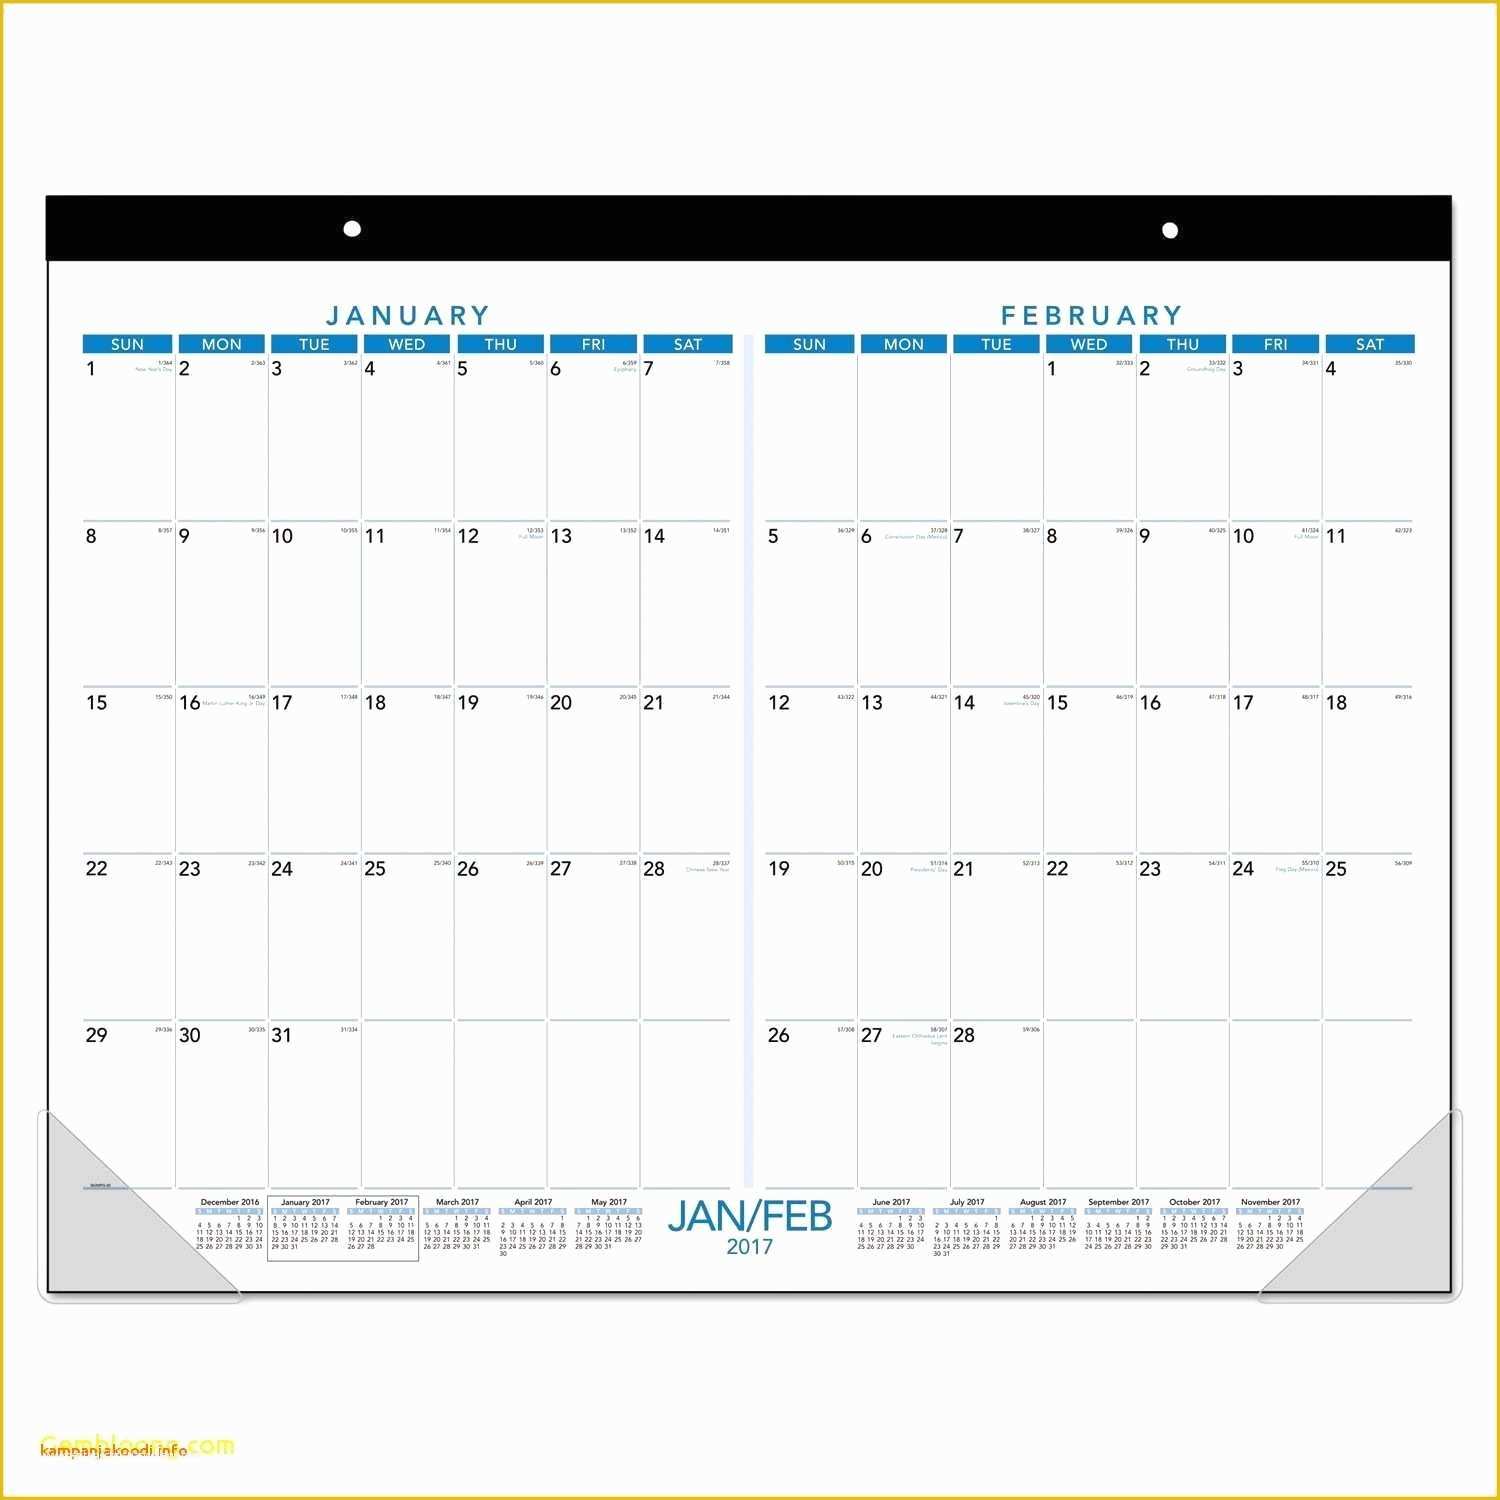 Free Indesign Calendar Template 2018 Of Details associated with 2019 Calendar Template Indesign